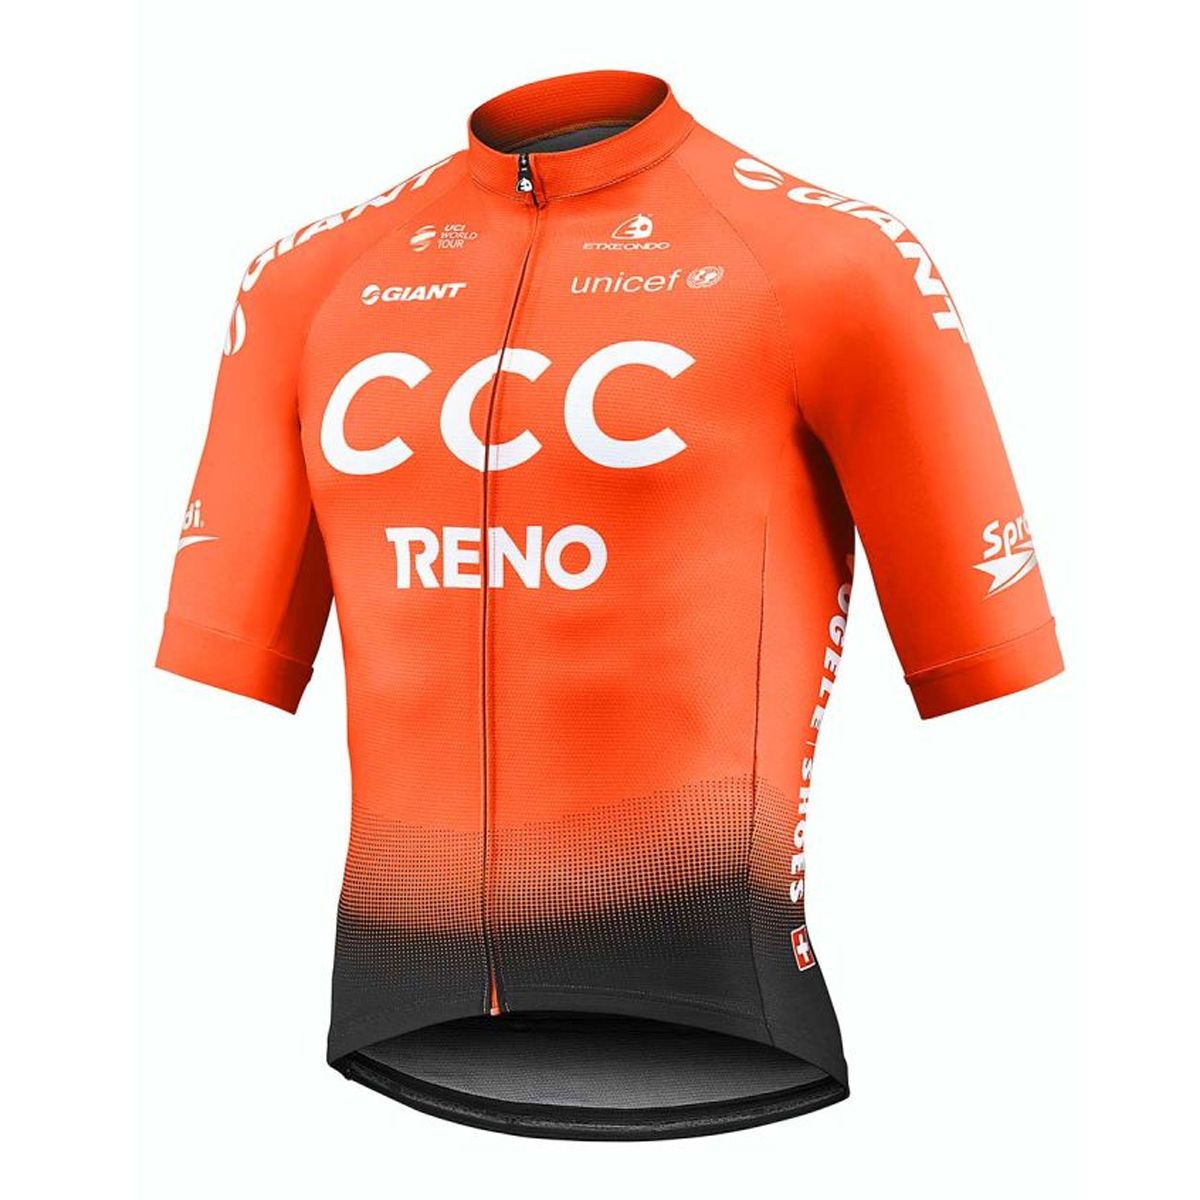 De specialist Team CCC oranje wielershirt